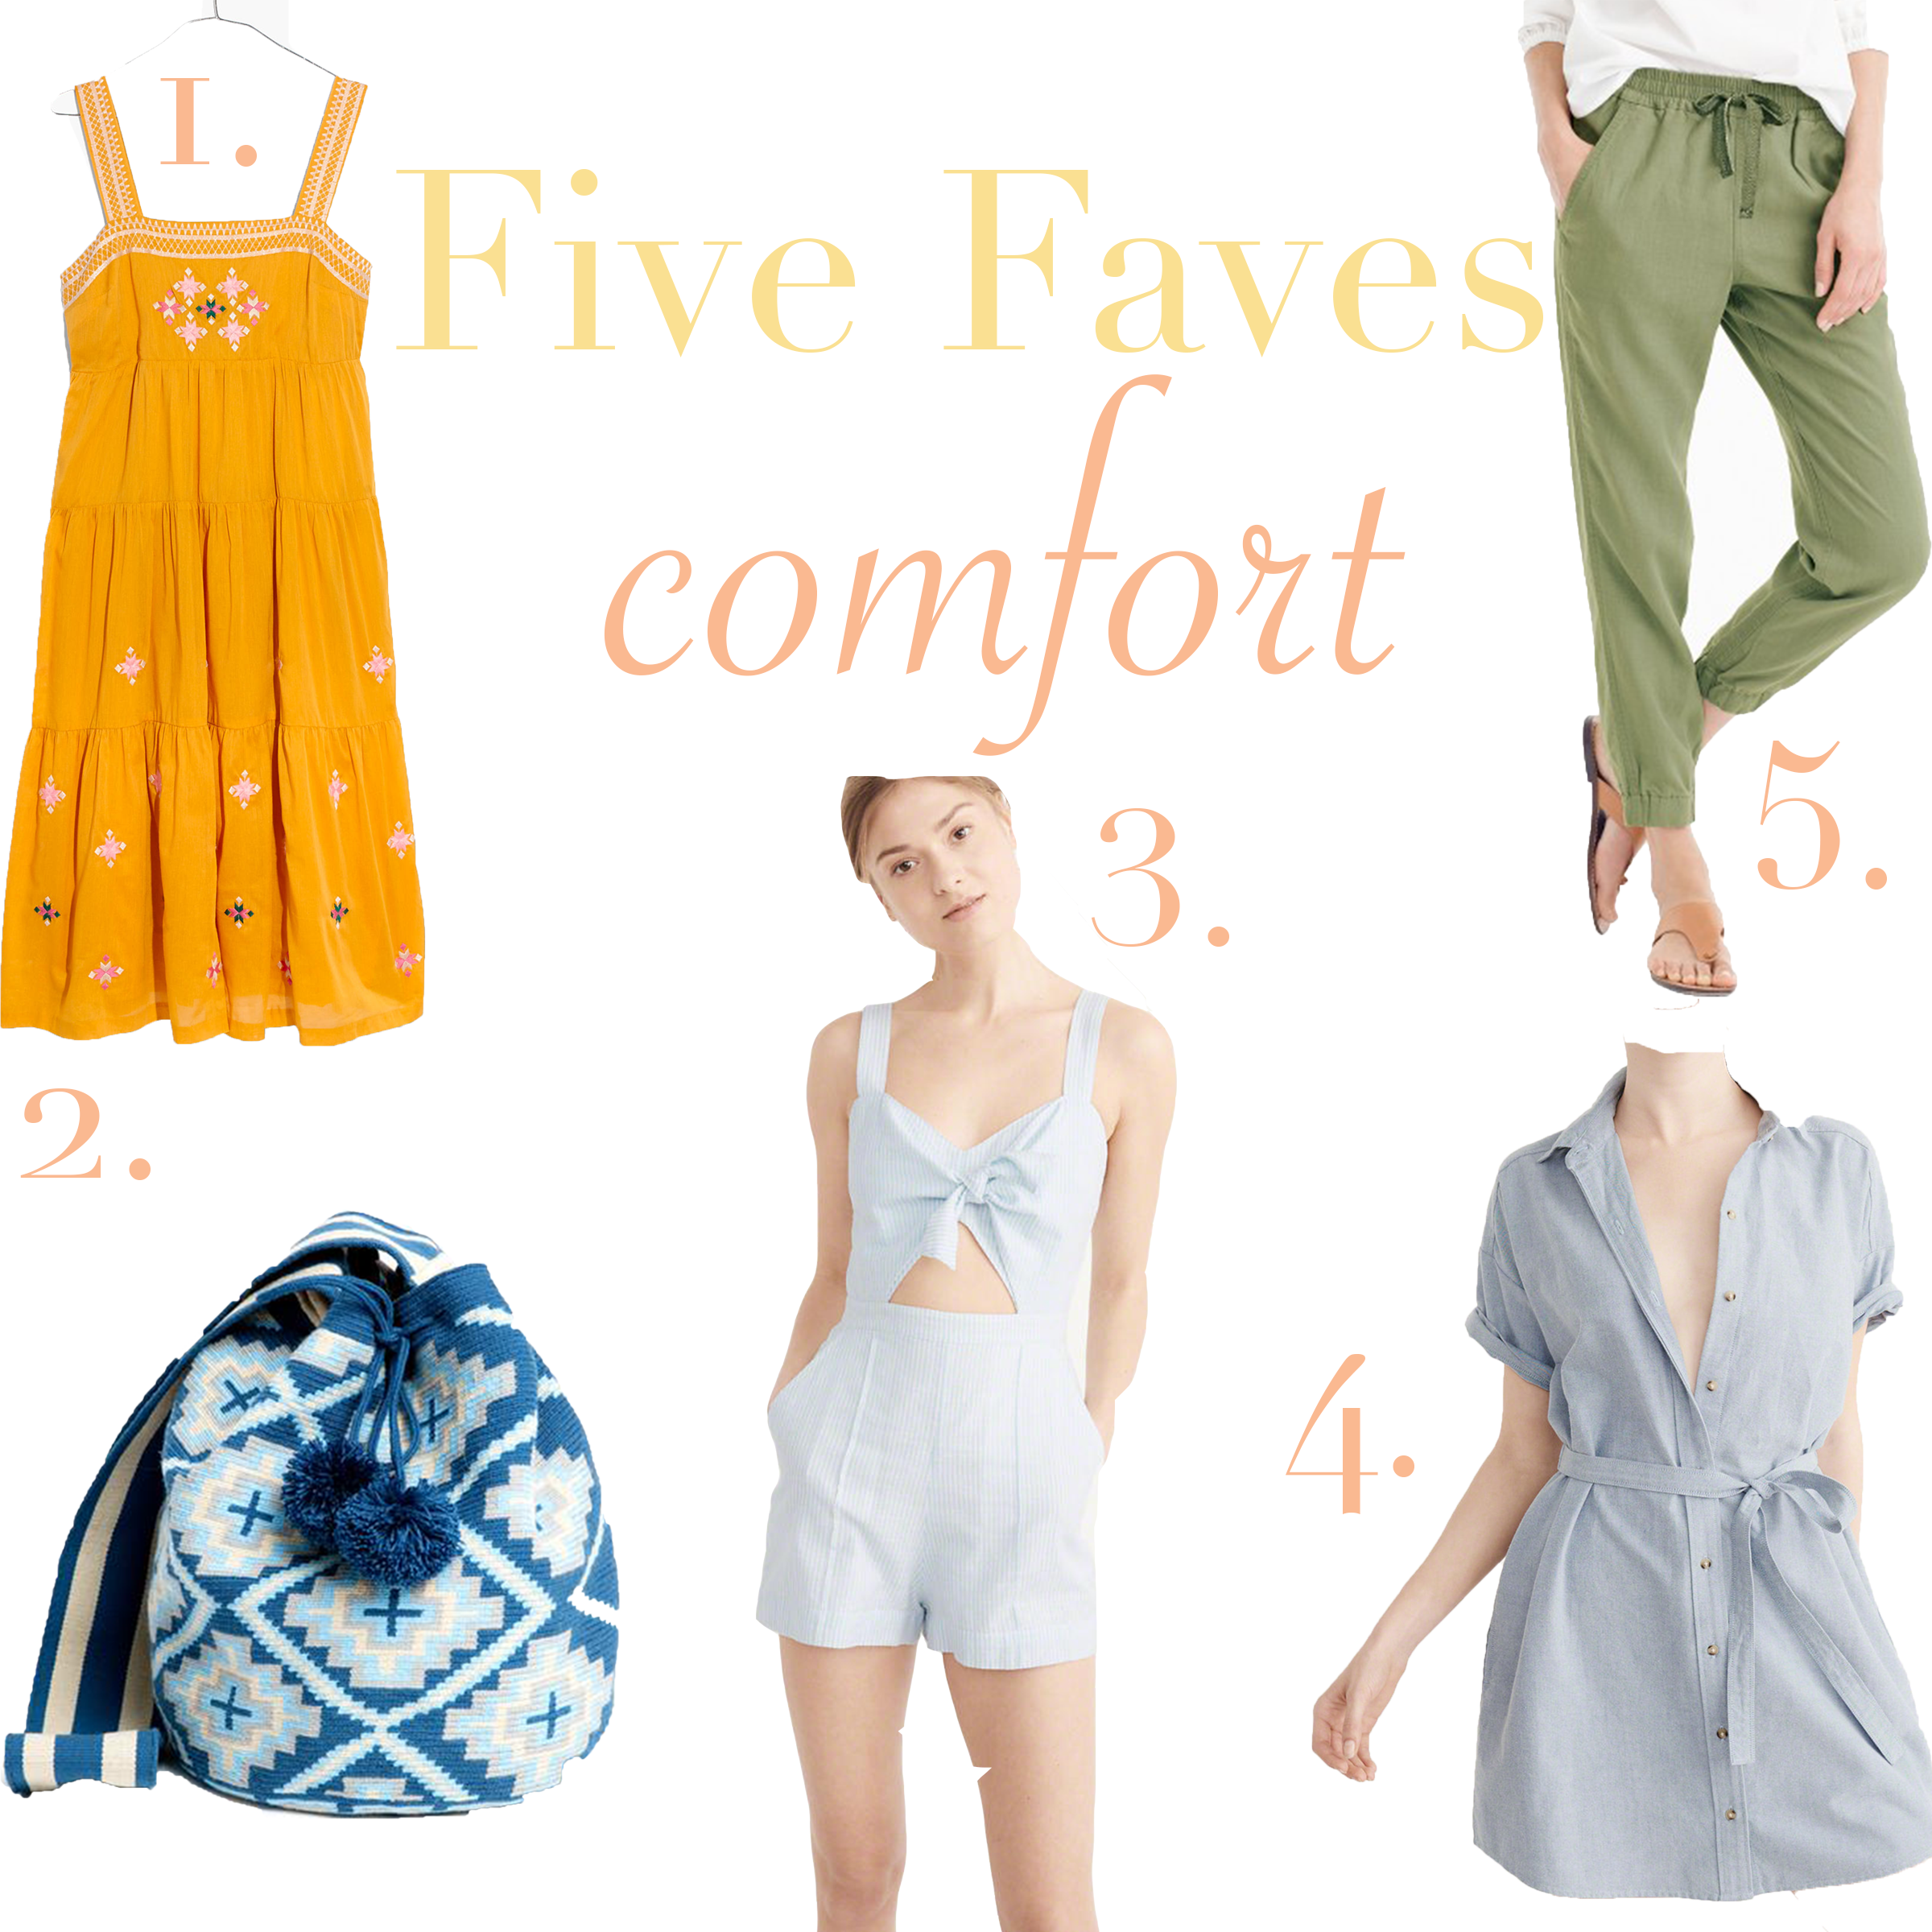 Five Faves~ Comfort